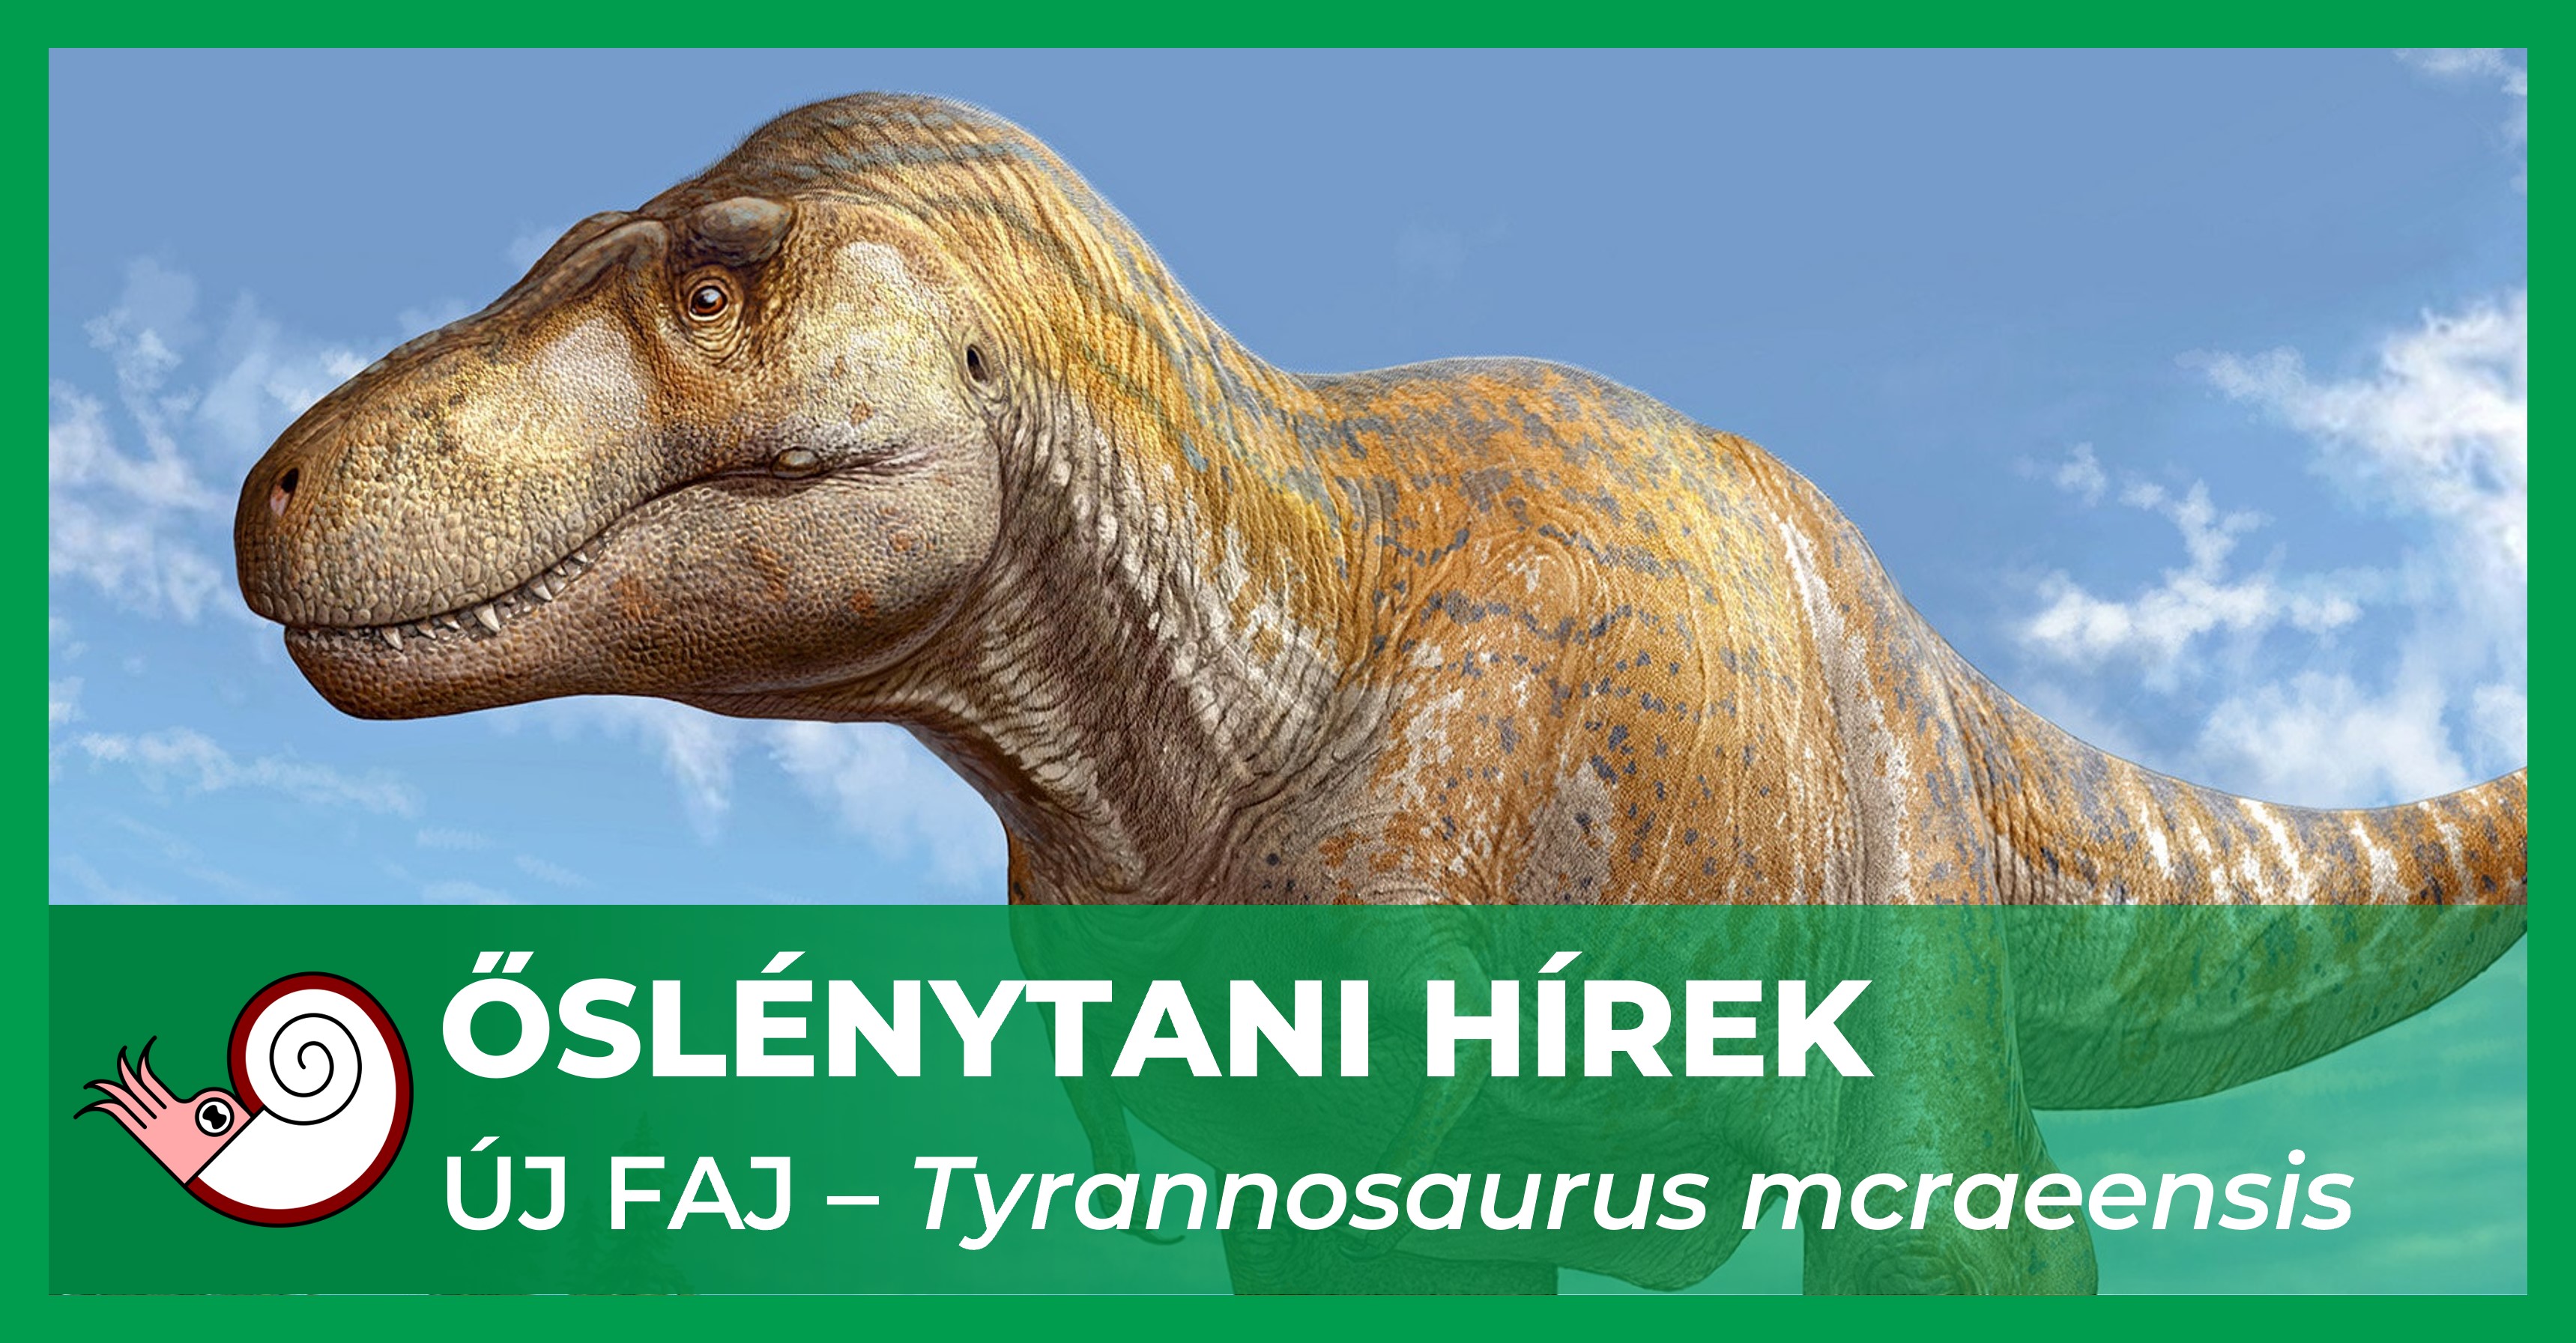 _fb_uj_tyrannosaurus_mcraeensis.jpg